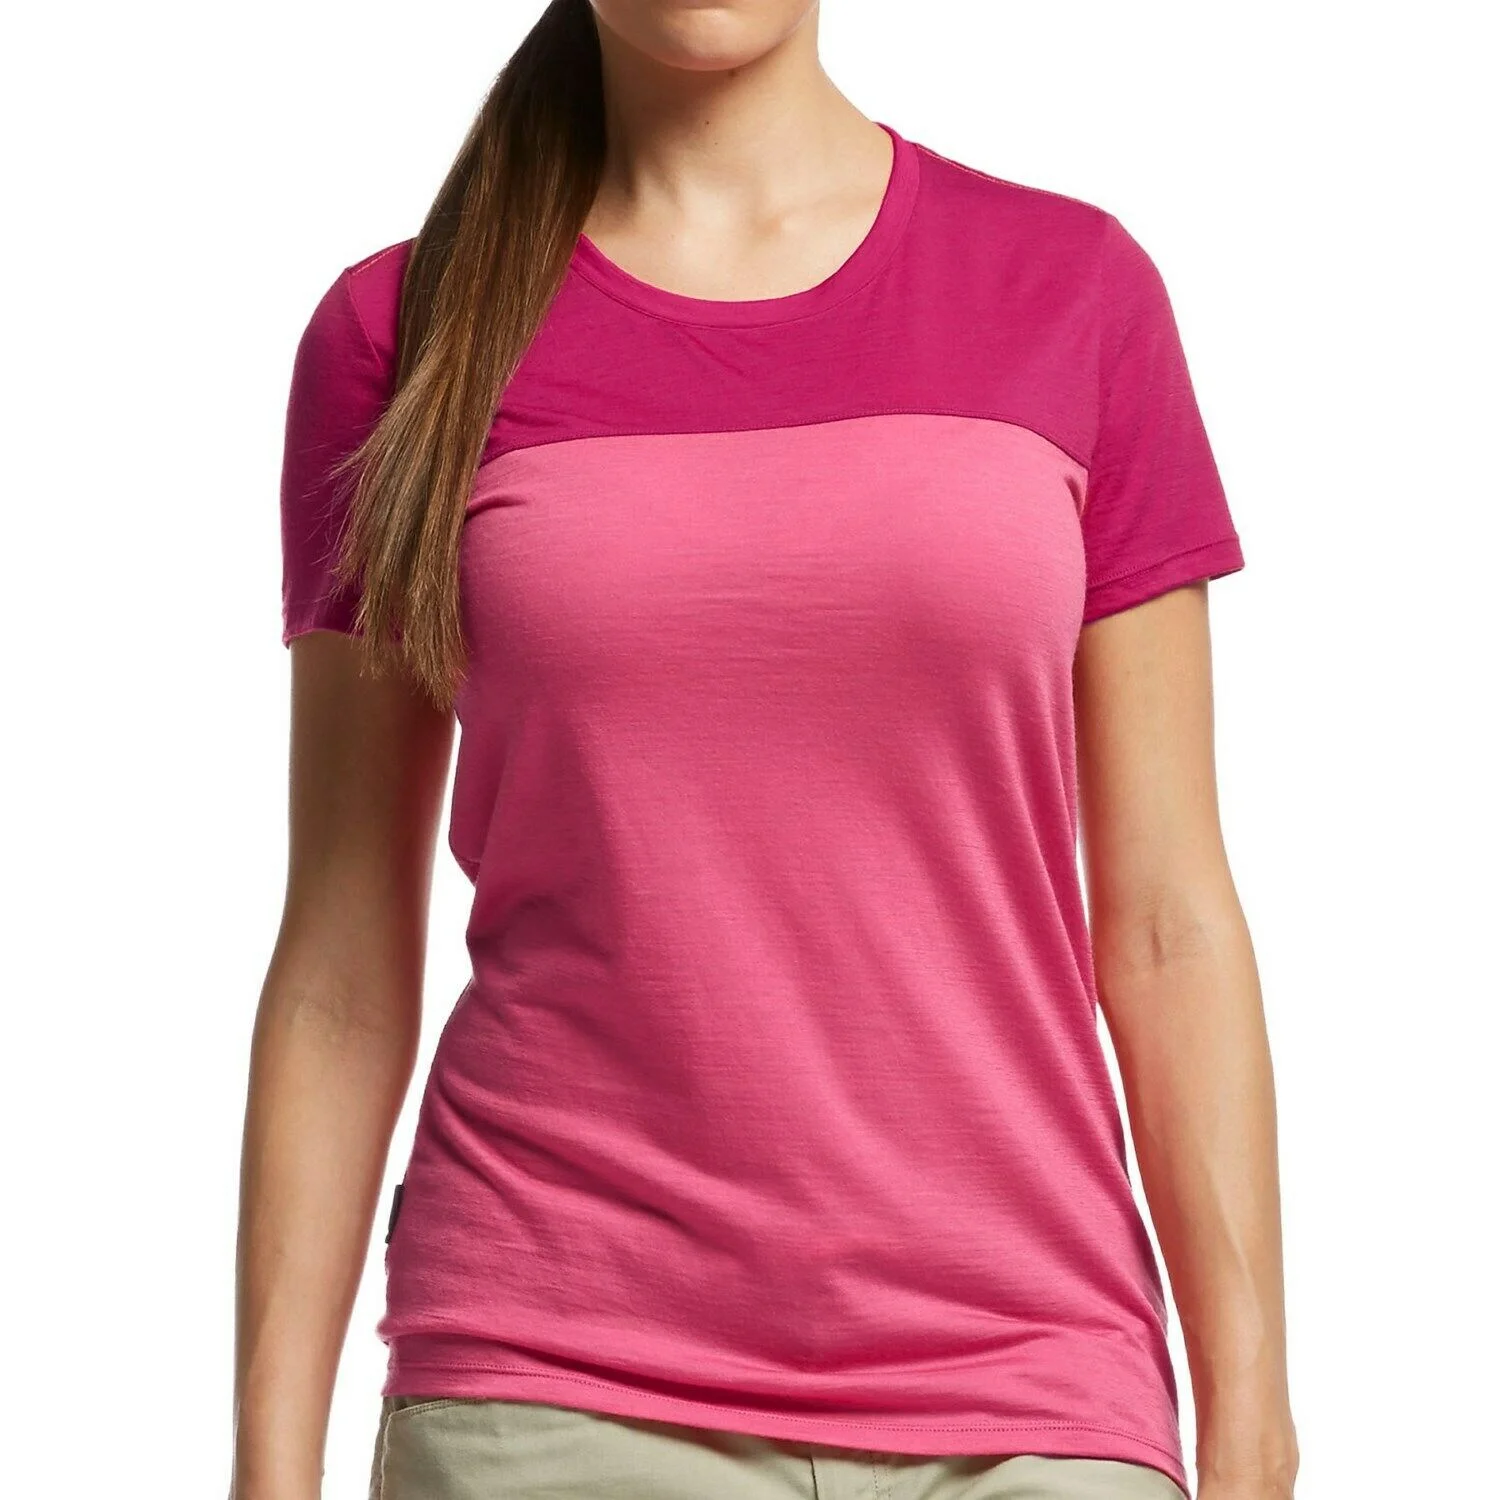 Wholesale Women Activewear T Shirt Supplier Bangladesh Factory